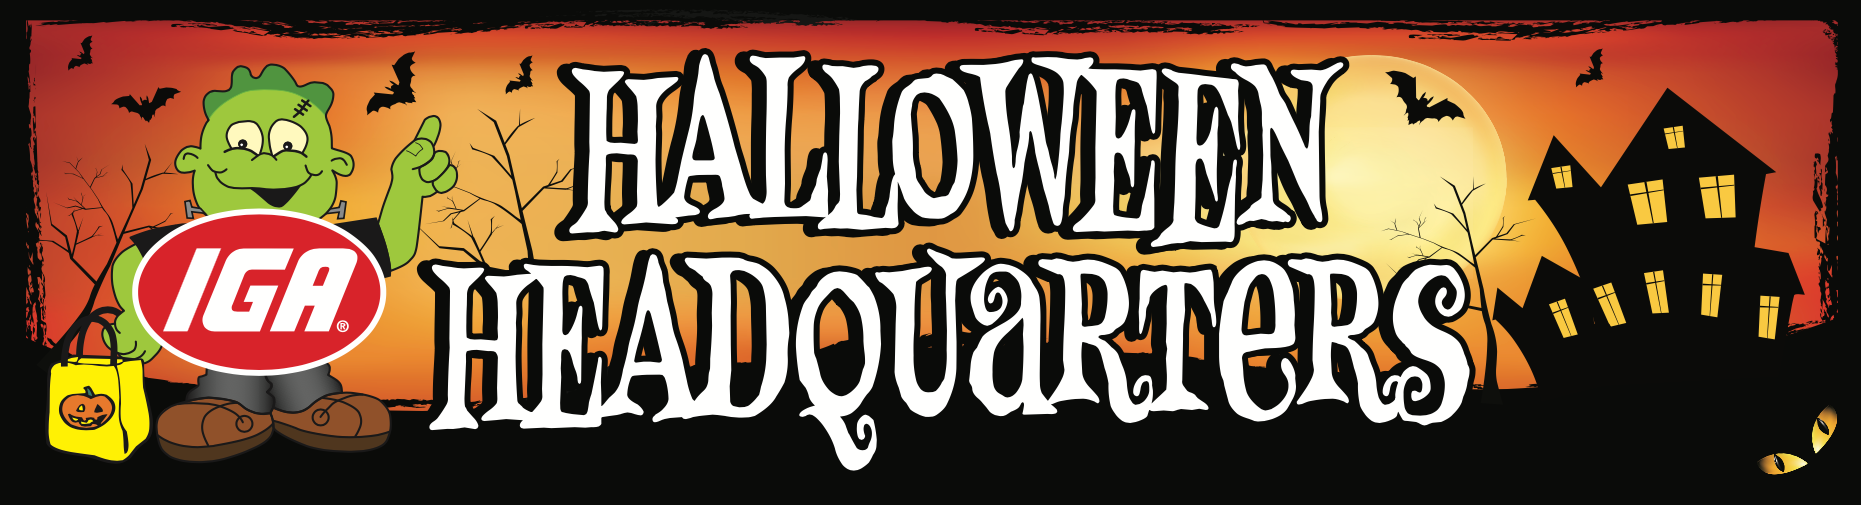 IGA Halloween Headquarters Seasonal Banner-5'x3'